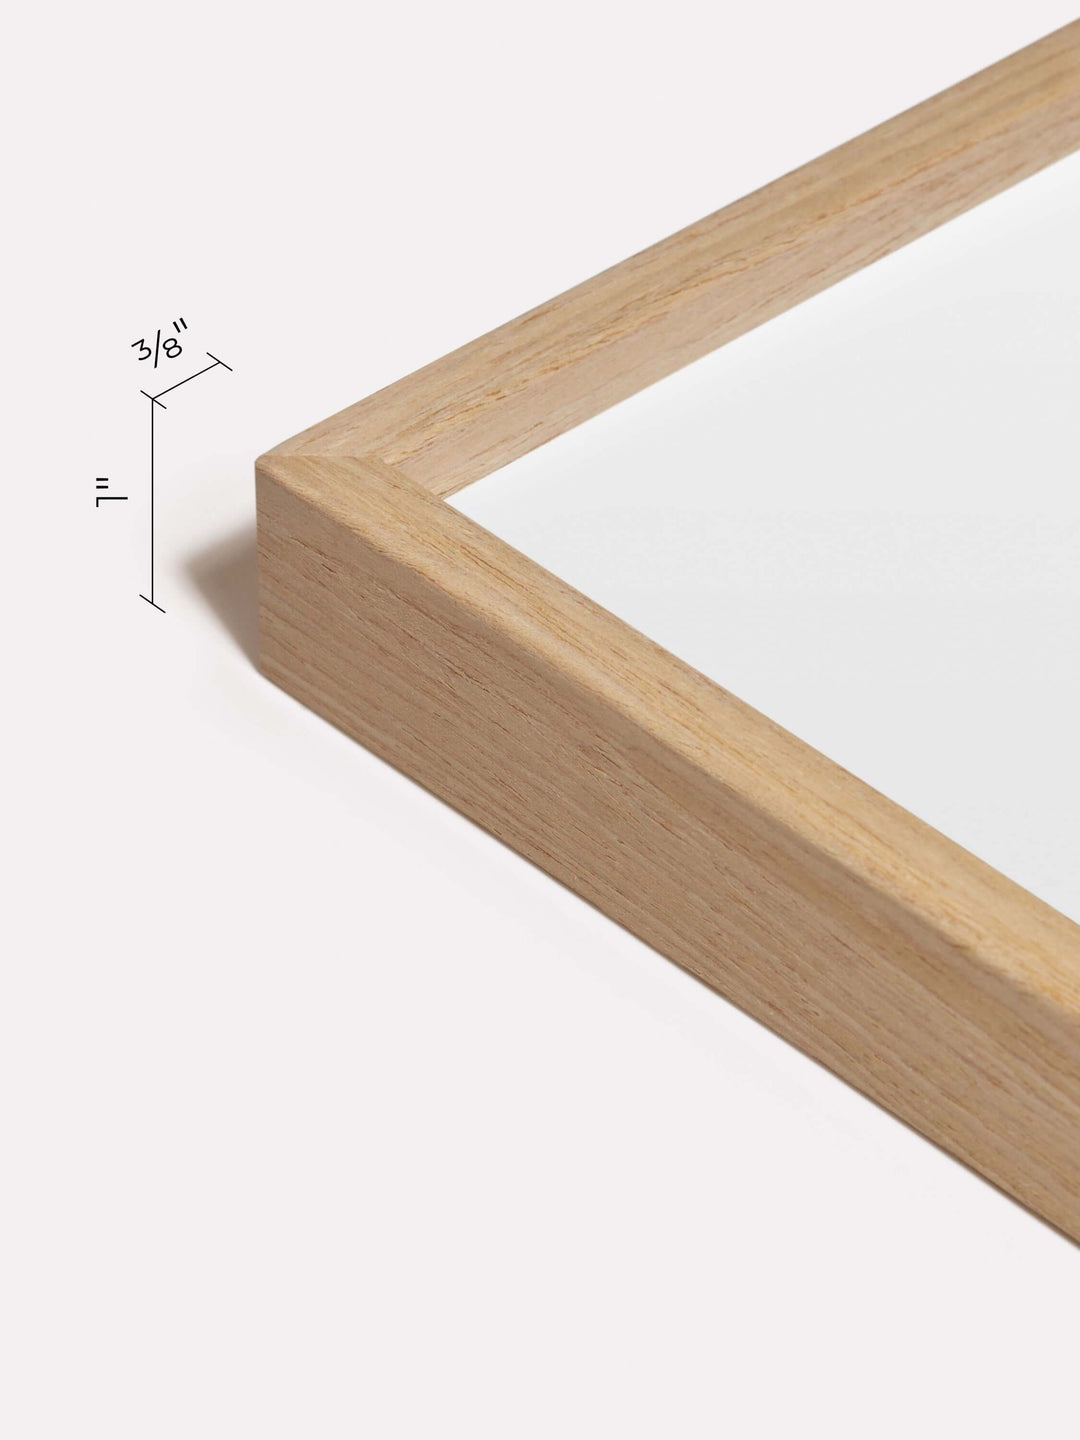 8x12-inch Thin Frame, Oak - Close-up view